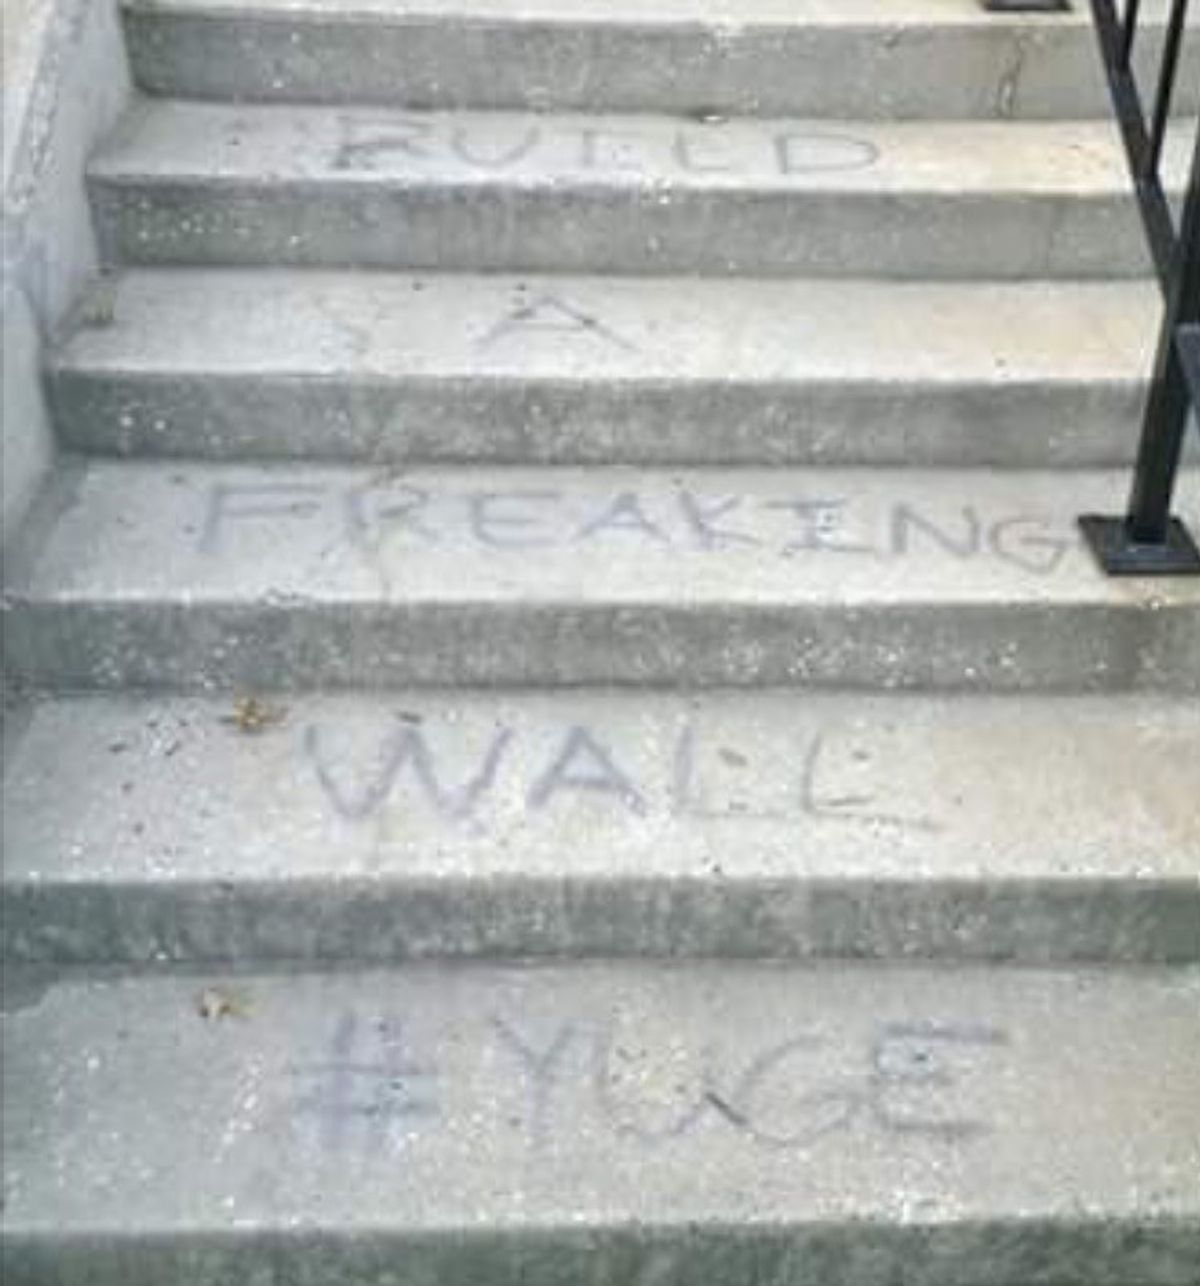 Hateful Messages Spread Across University Of Alabama's Campus